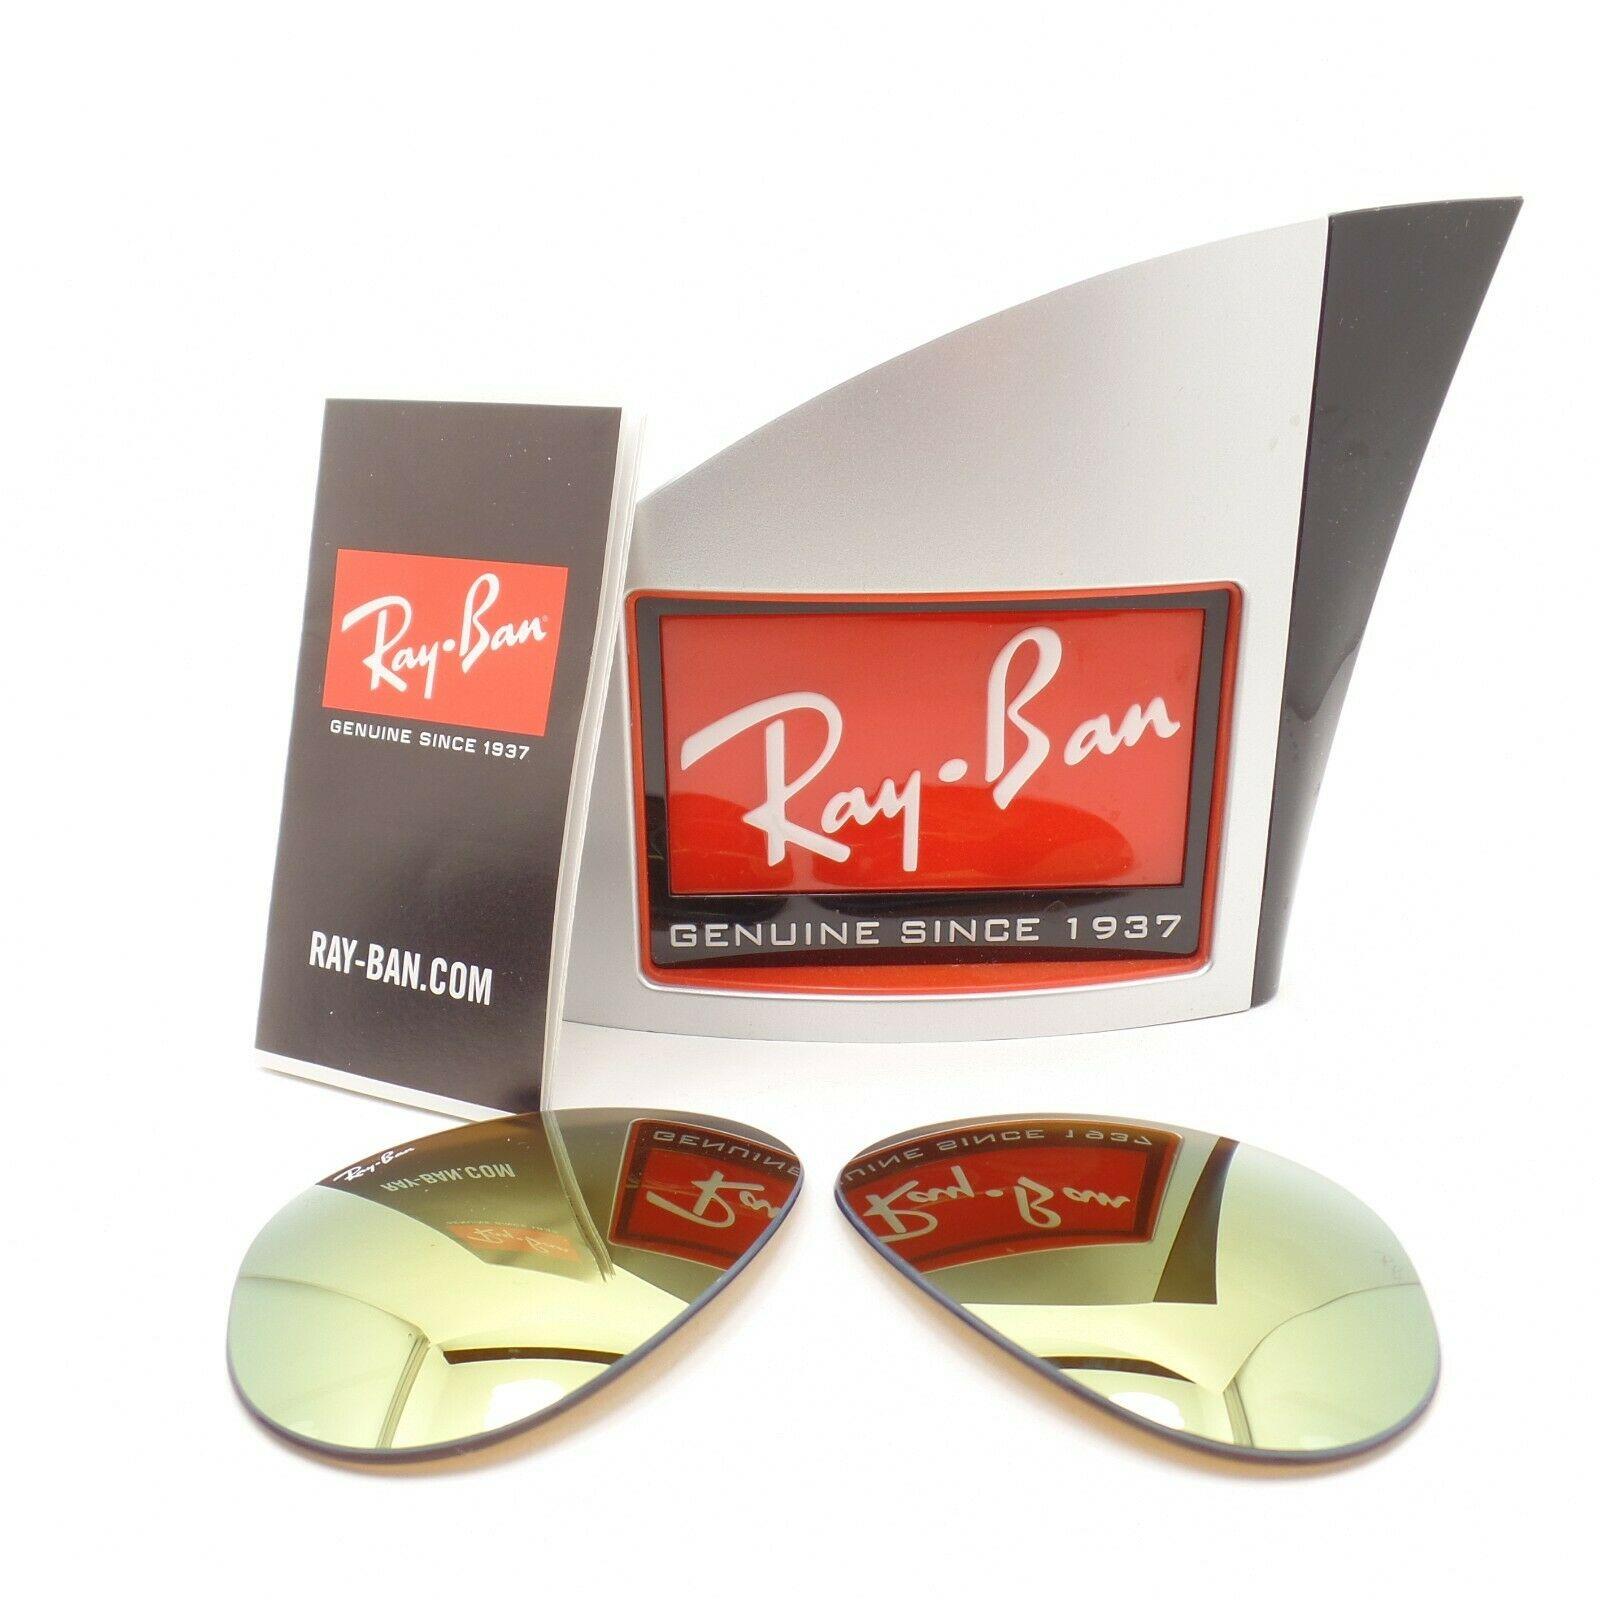 Ray-ban Ray Ban 3025 Replacement Lenses Aviator 112/93 Gold Mirr